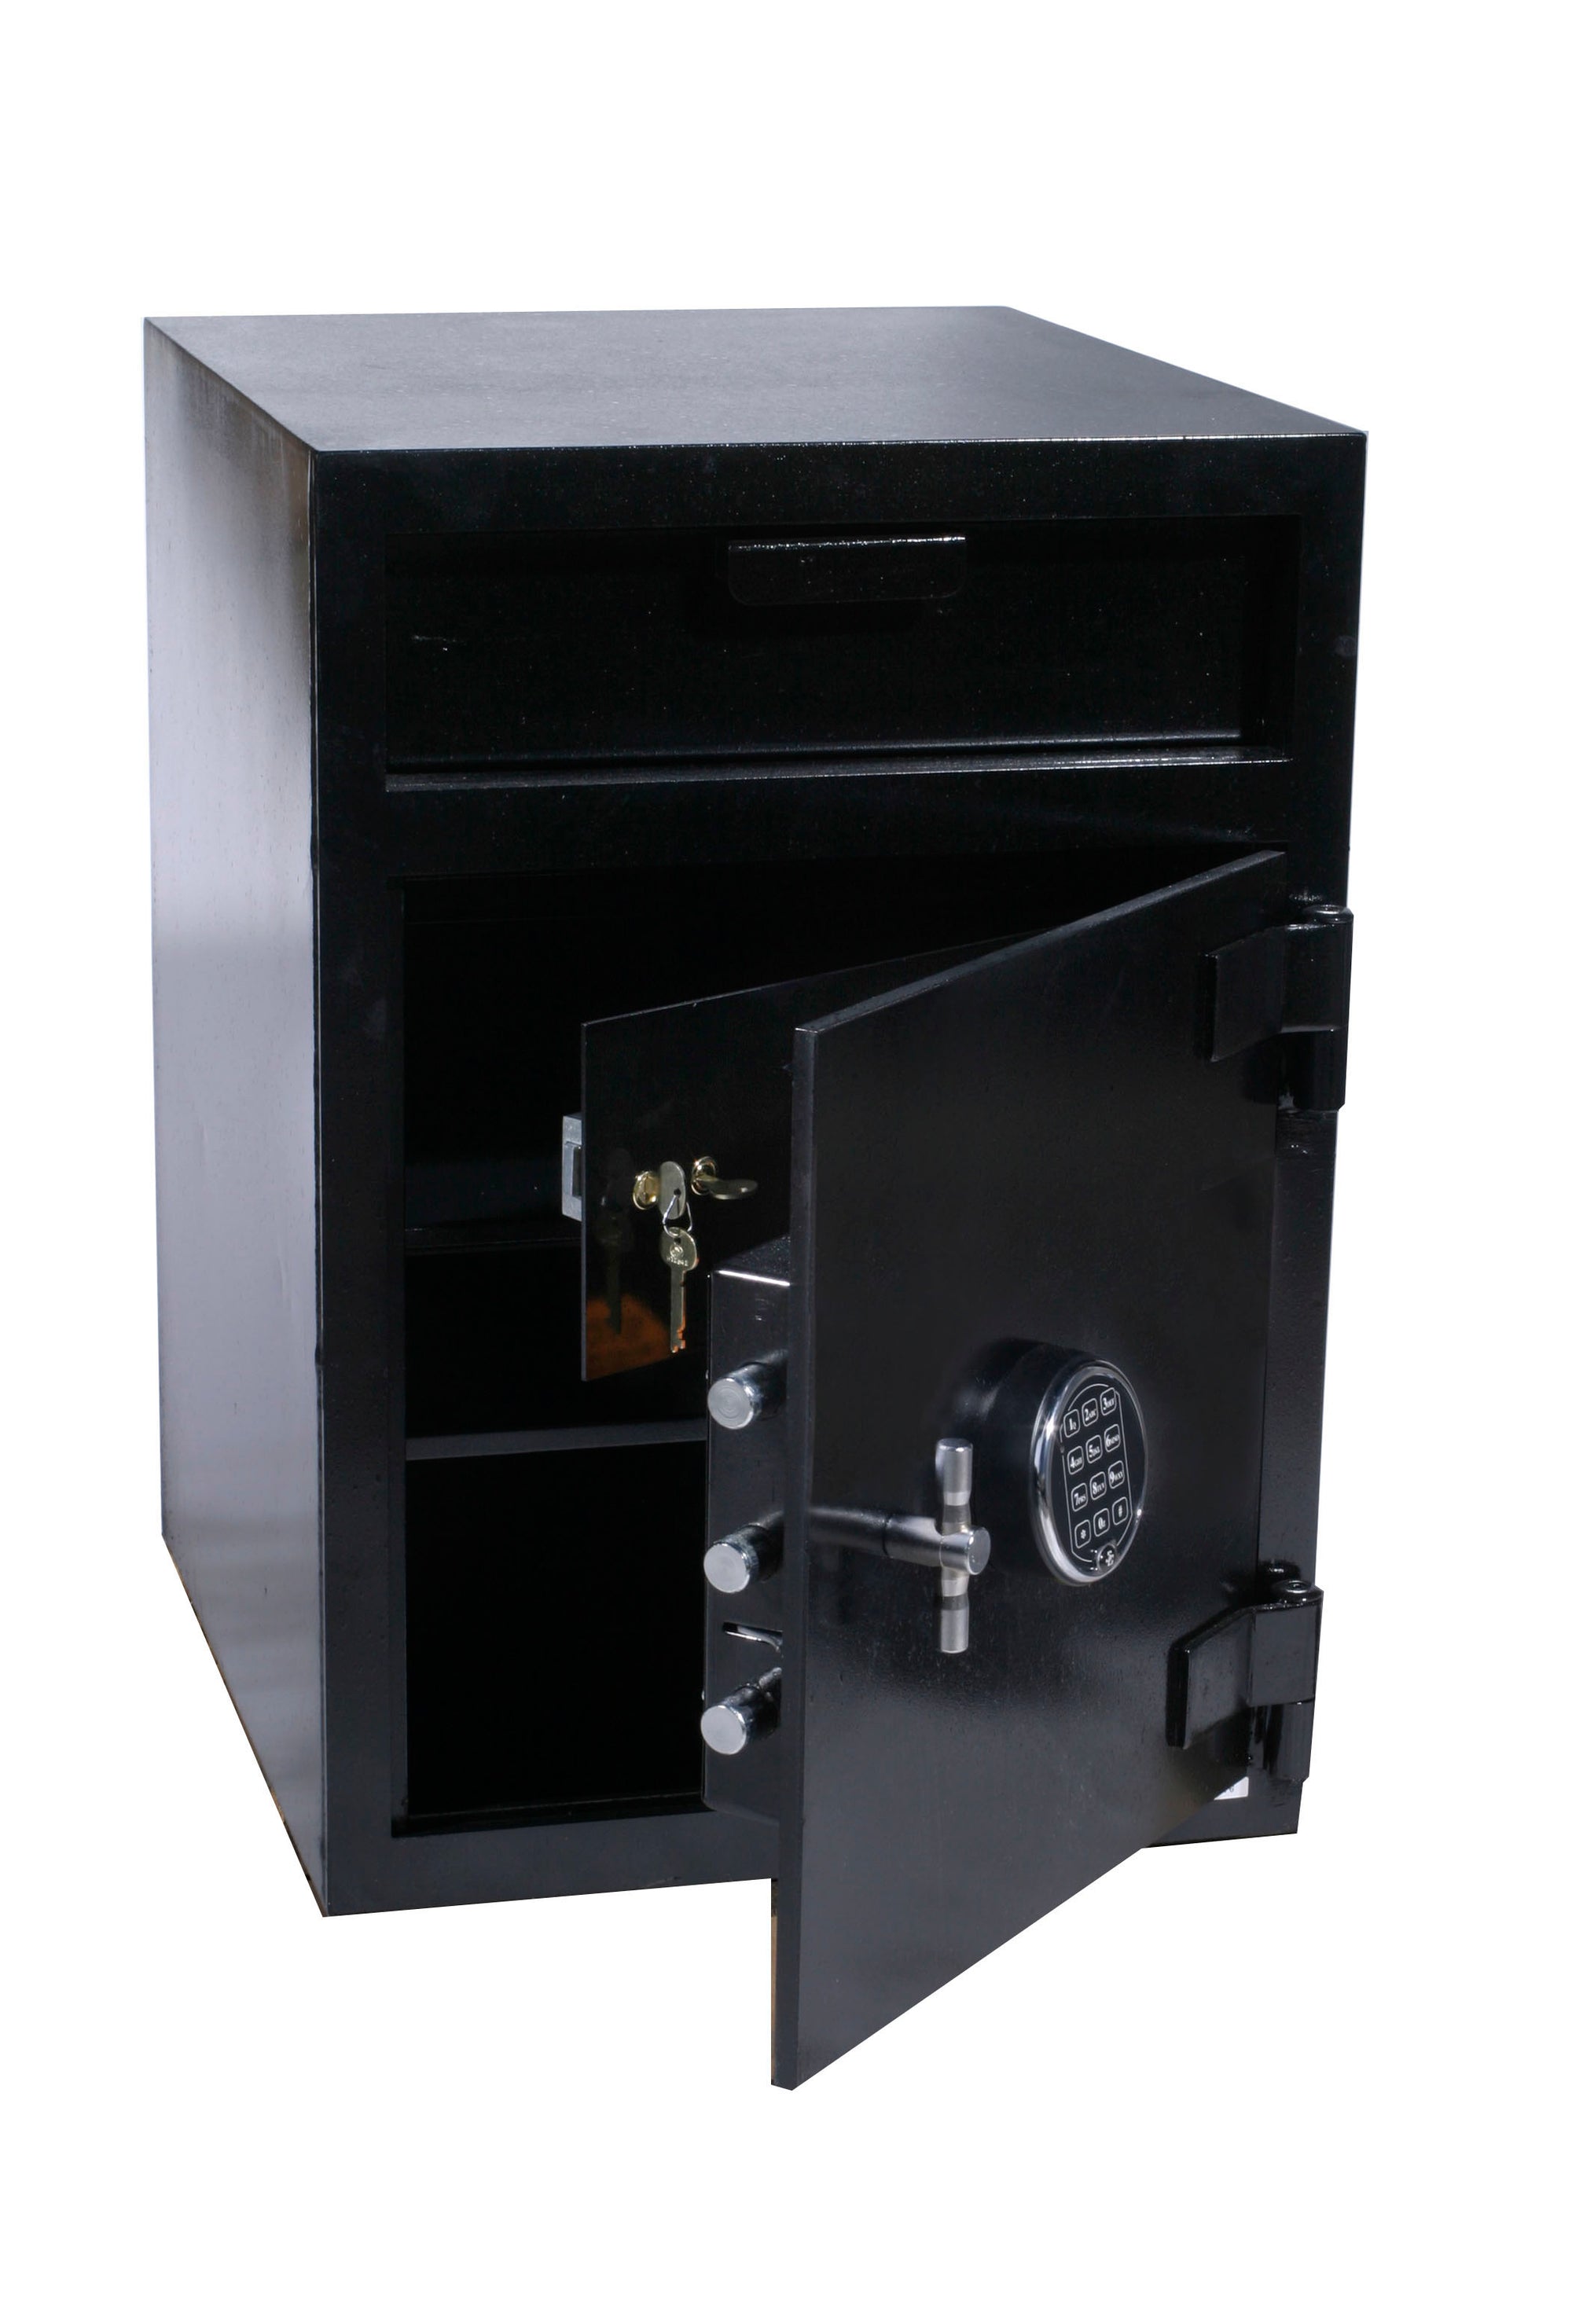 Cennox MB2720ICH-FK1 Depository Safe with Internal Locker